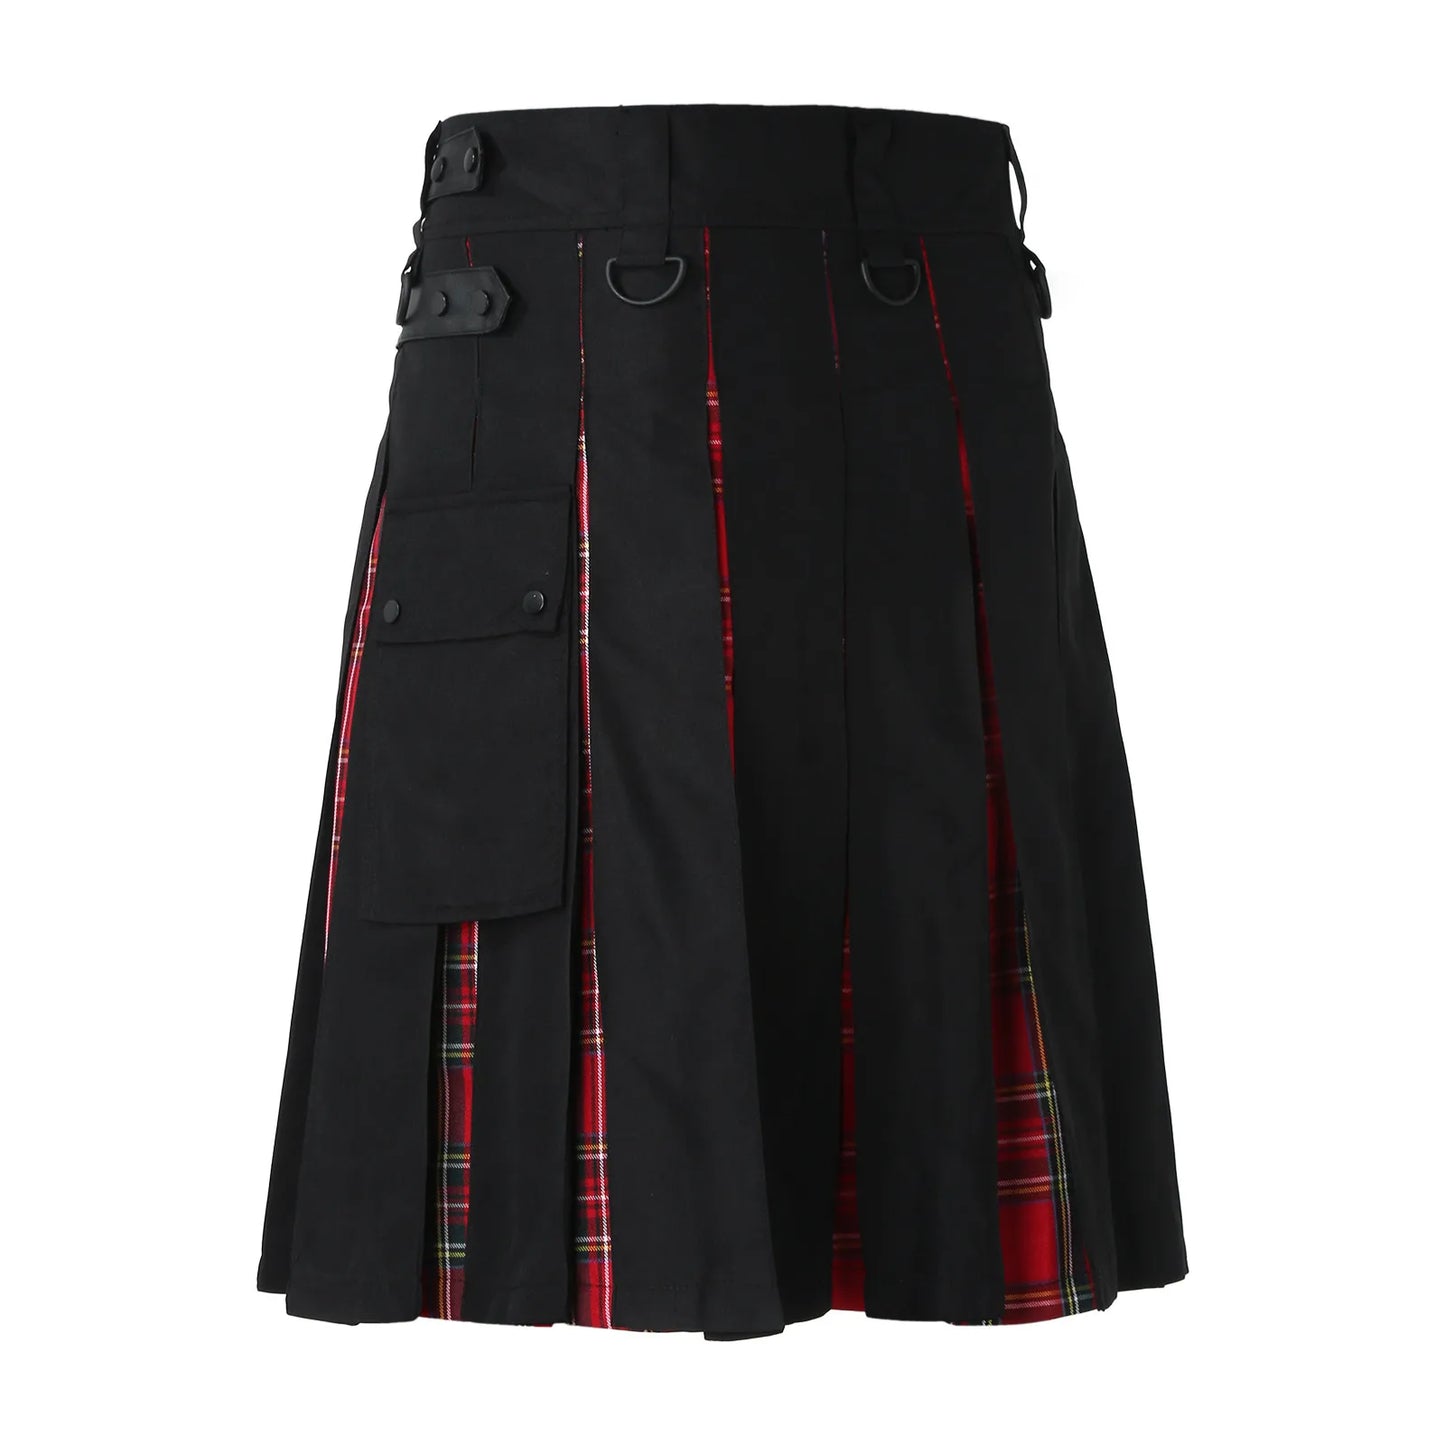 JuliaFashion - Scottish Mens Kilt Fashion Casual Retro Scottish Style Pocket Pleated Skirt Traditional Personality Kilts Check Pattern Skirts Dress